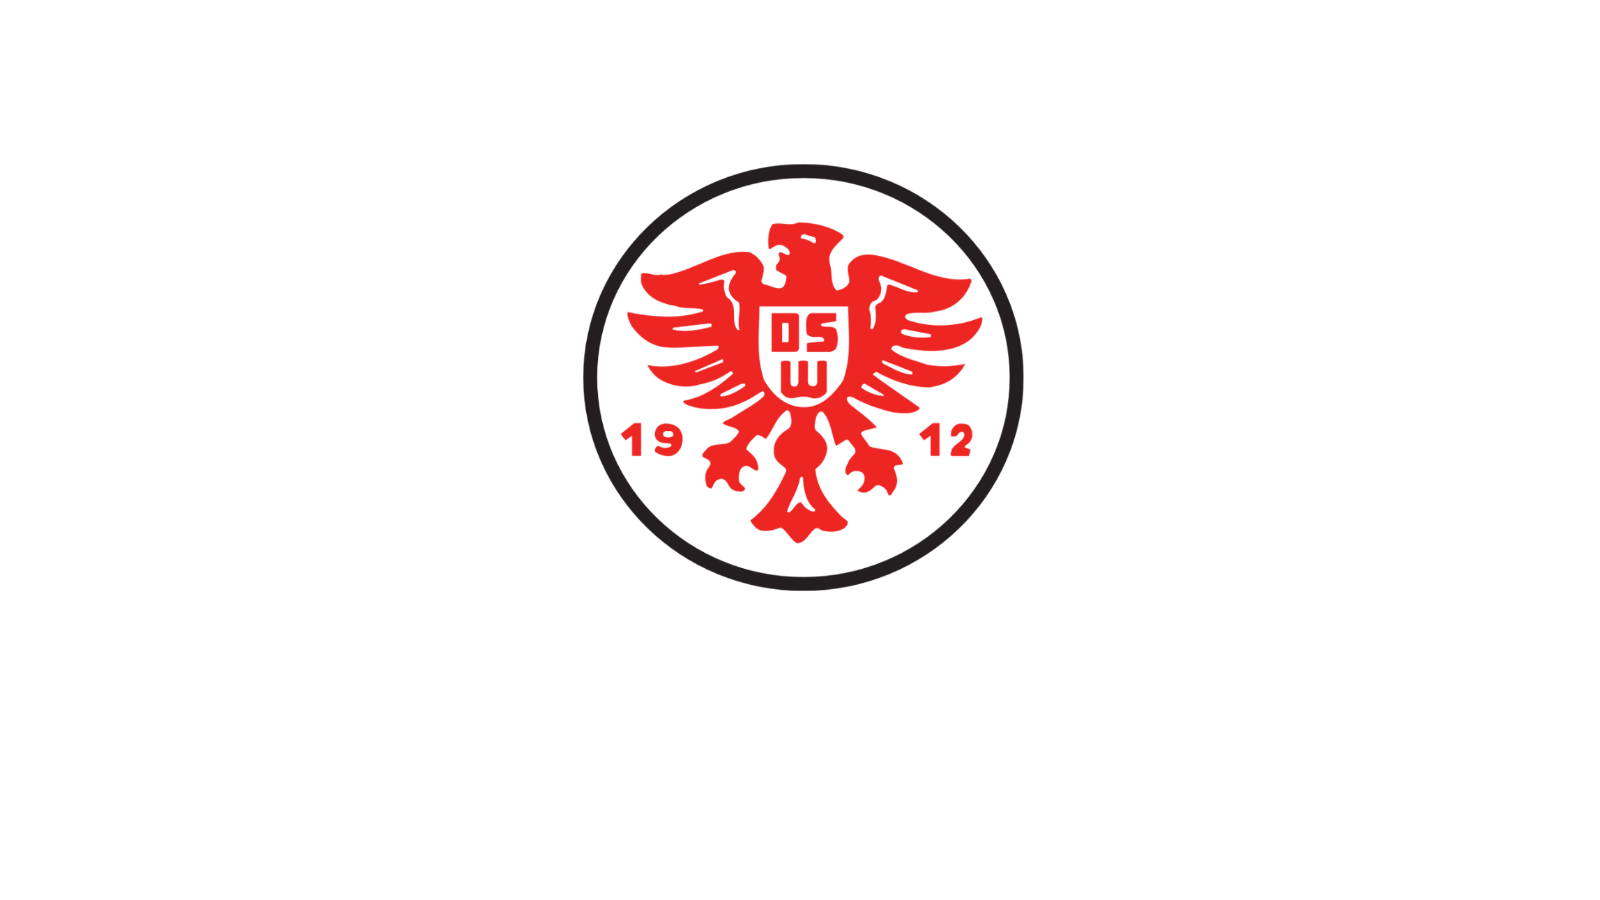 Landesliga: DSW Darmstadt